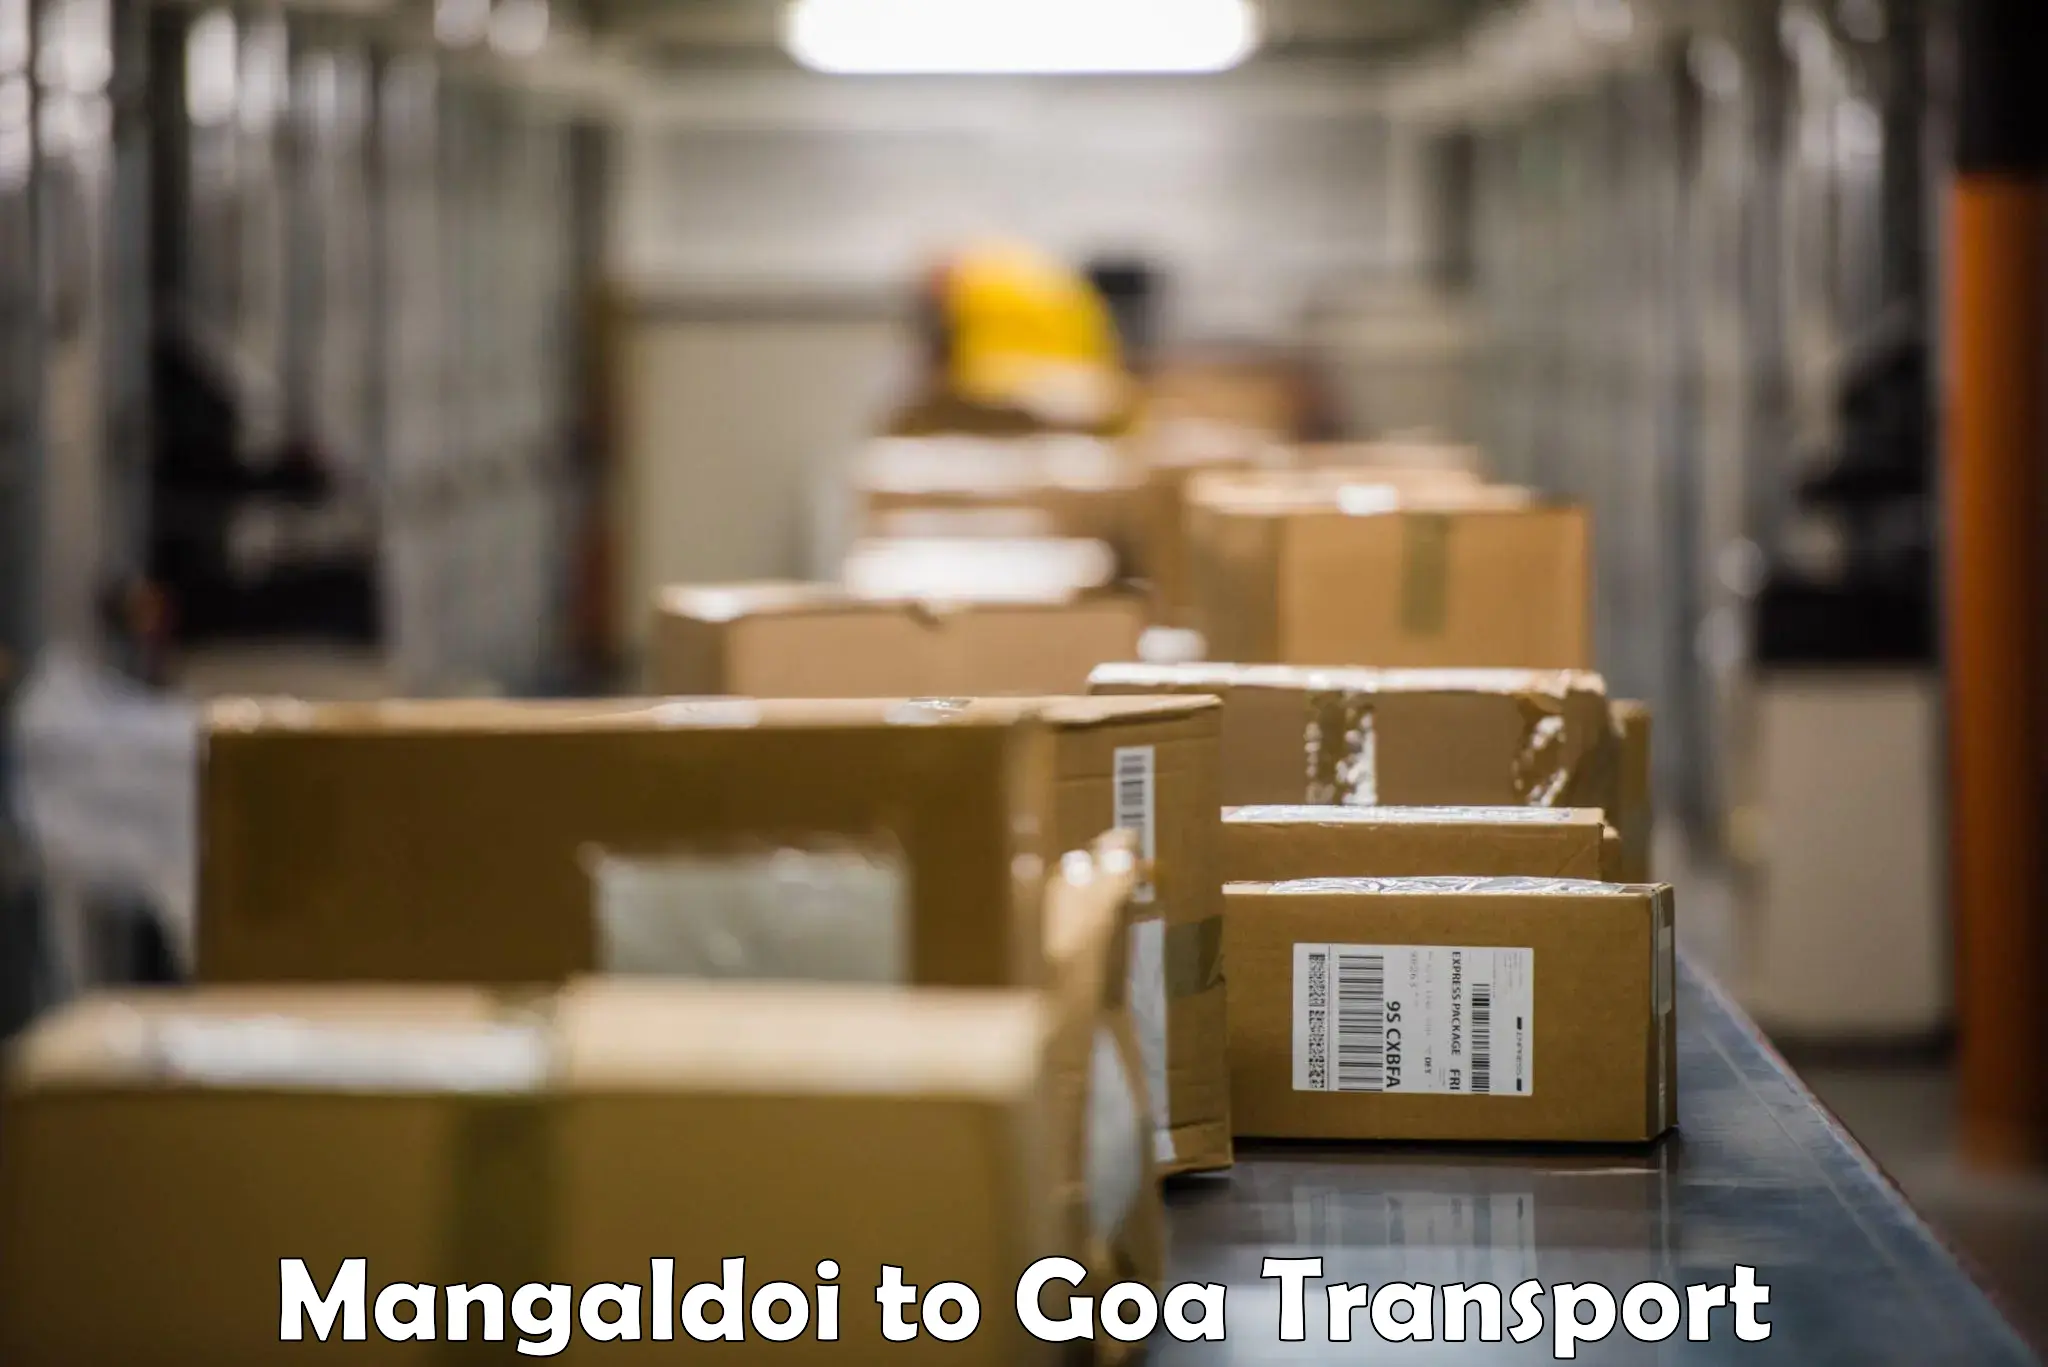 Truck transport companies in India Mangaldoi to IIT Goa